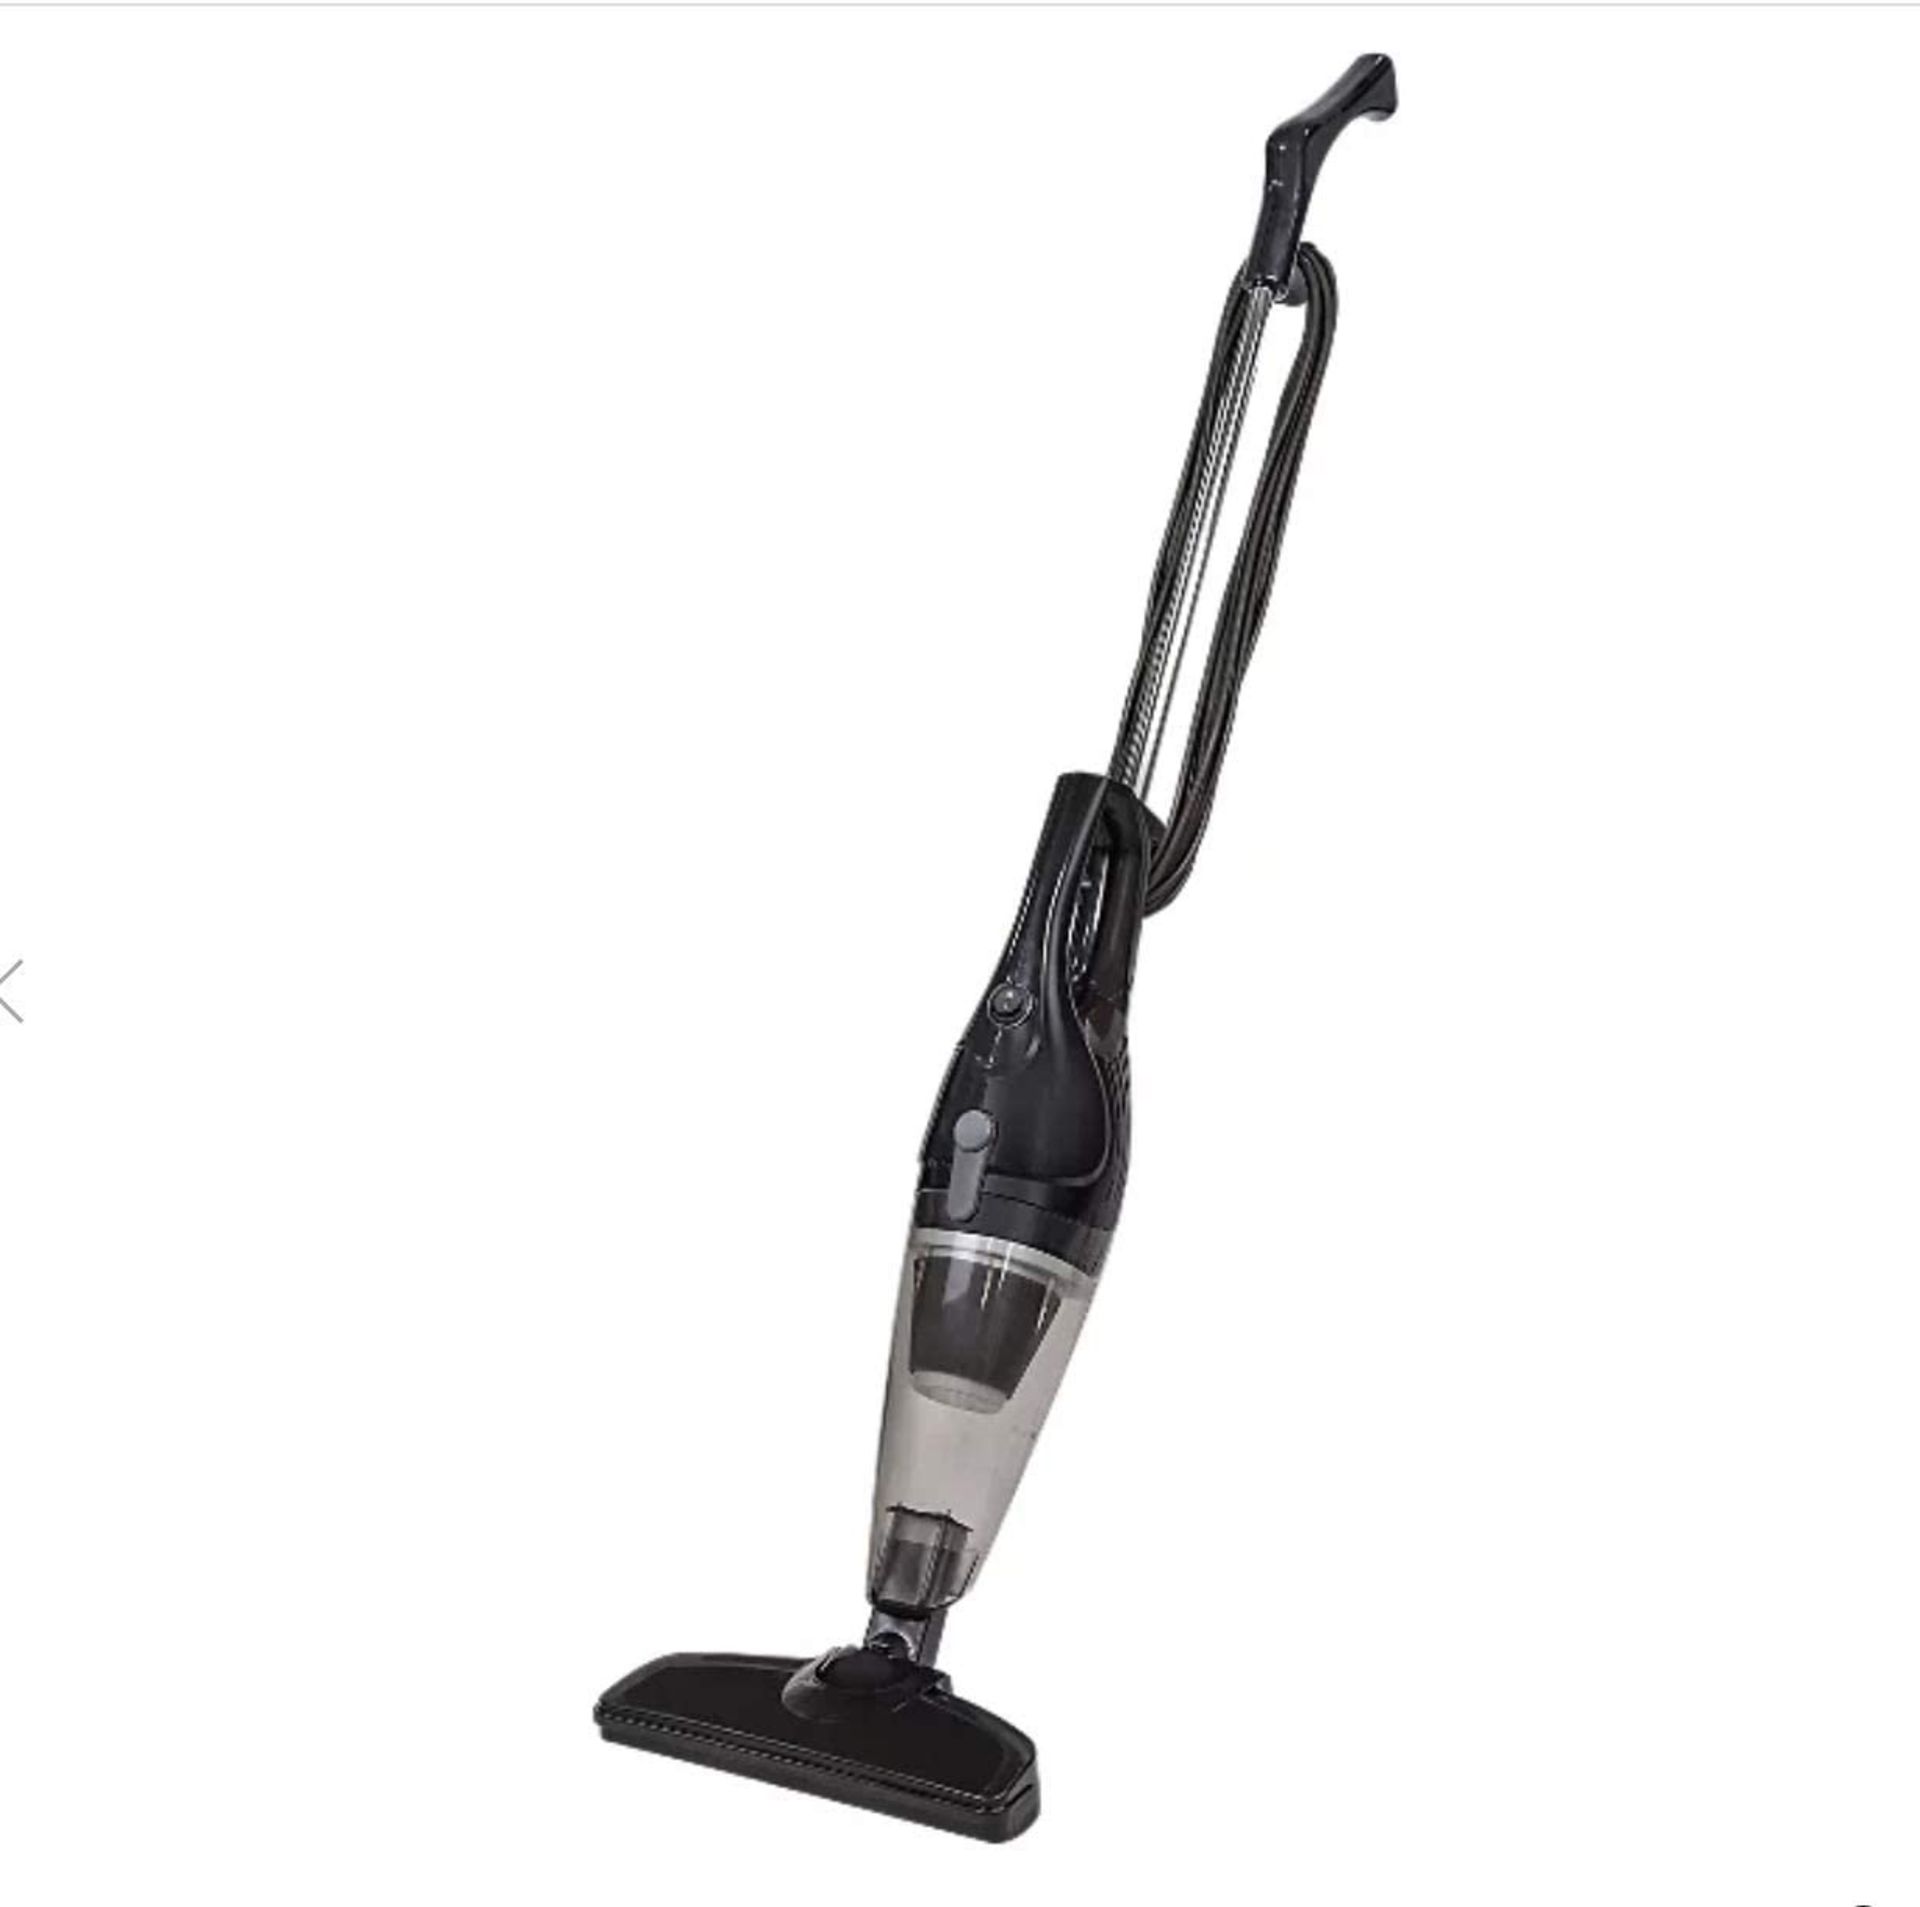 Goblin Lightweight Handheld Stick Vacuum Cleaner Gsv101b-19 Black Corded - FREE DELIVERY